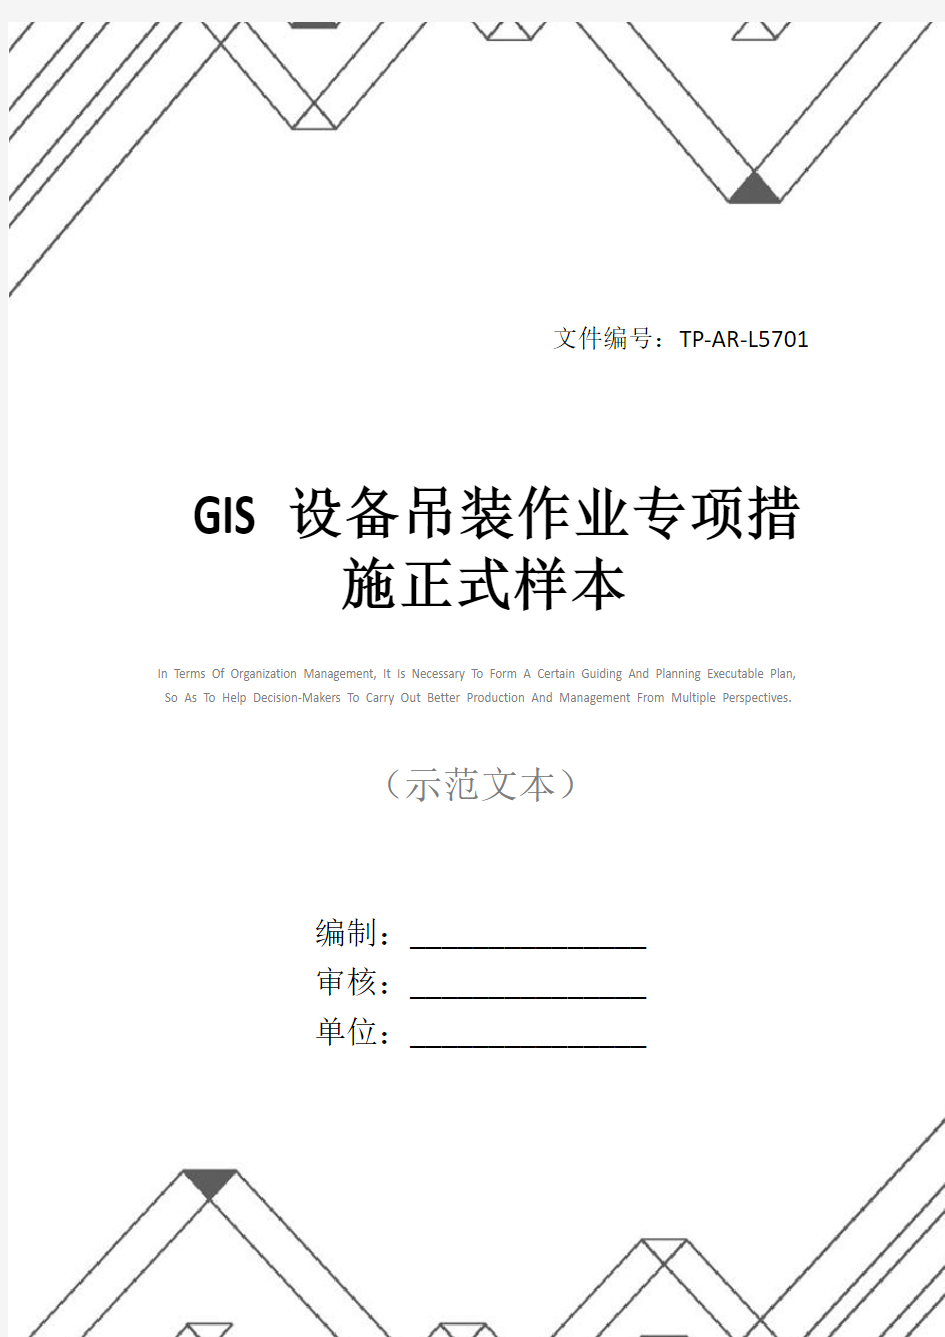 GIS设备吊装作业专项措施正式样本